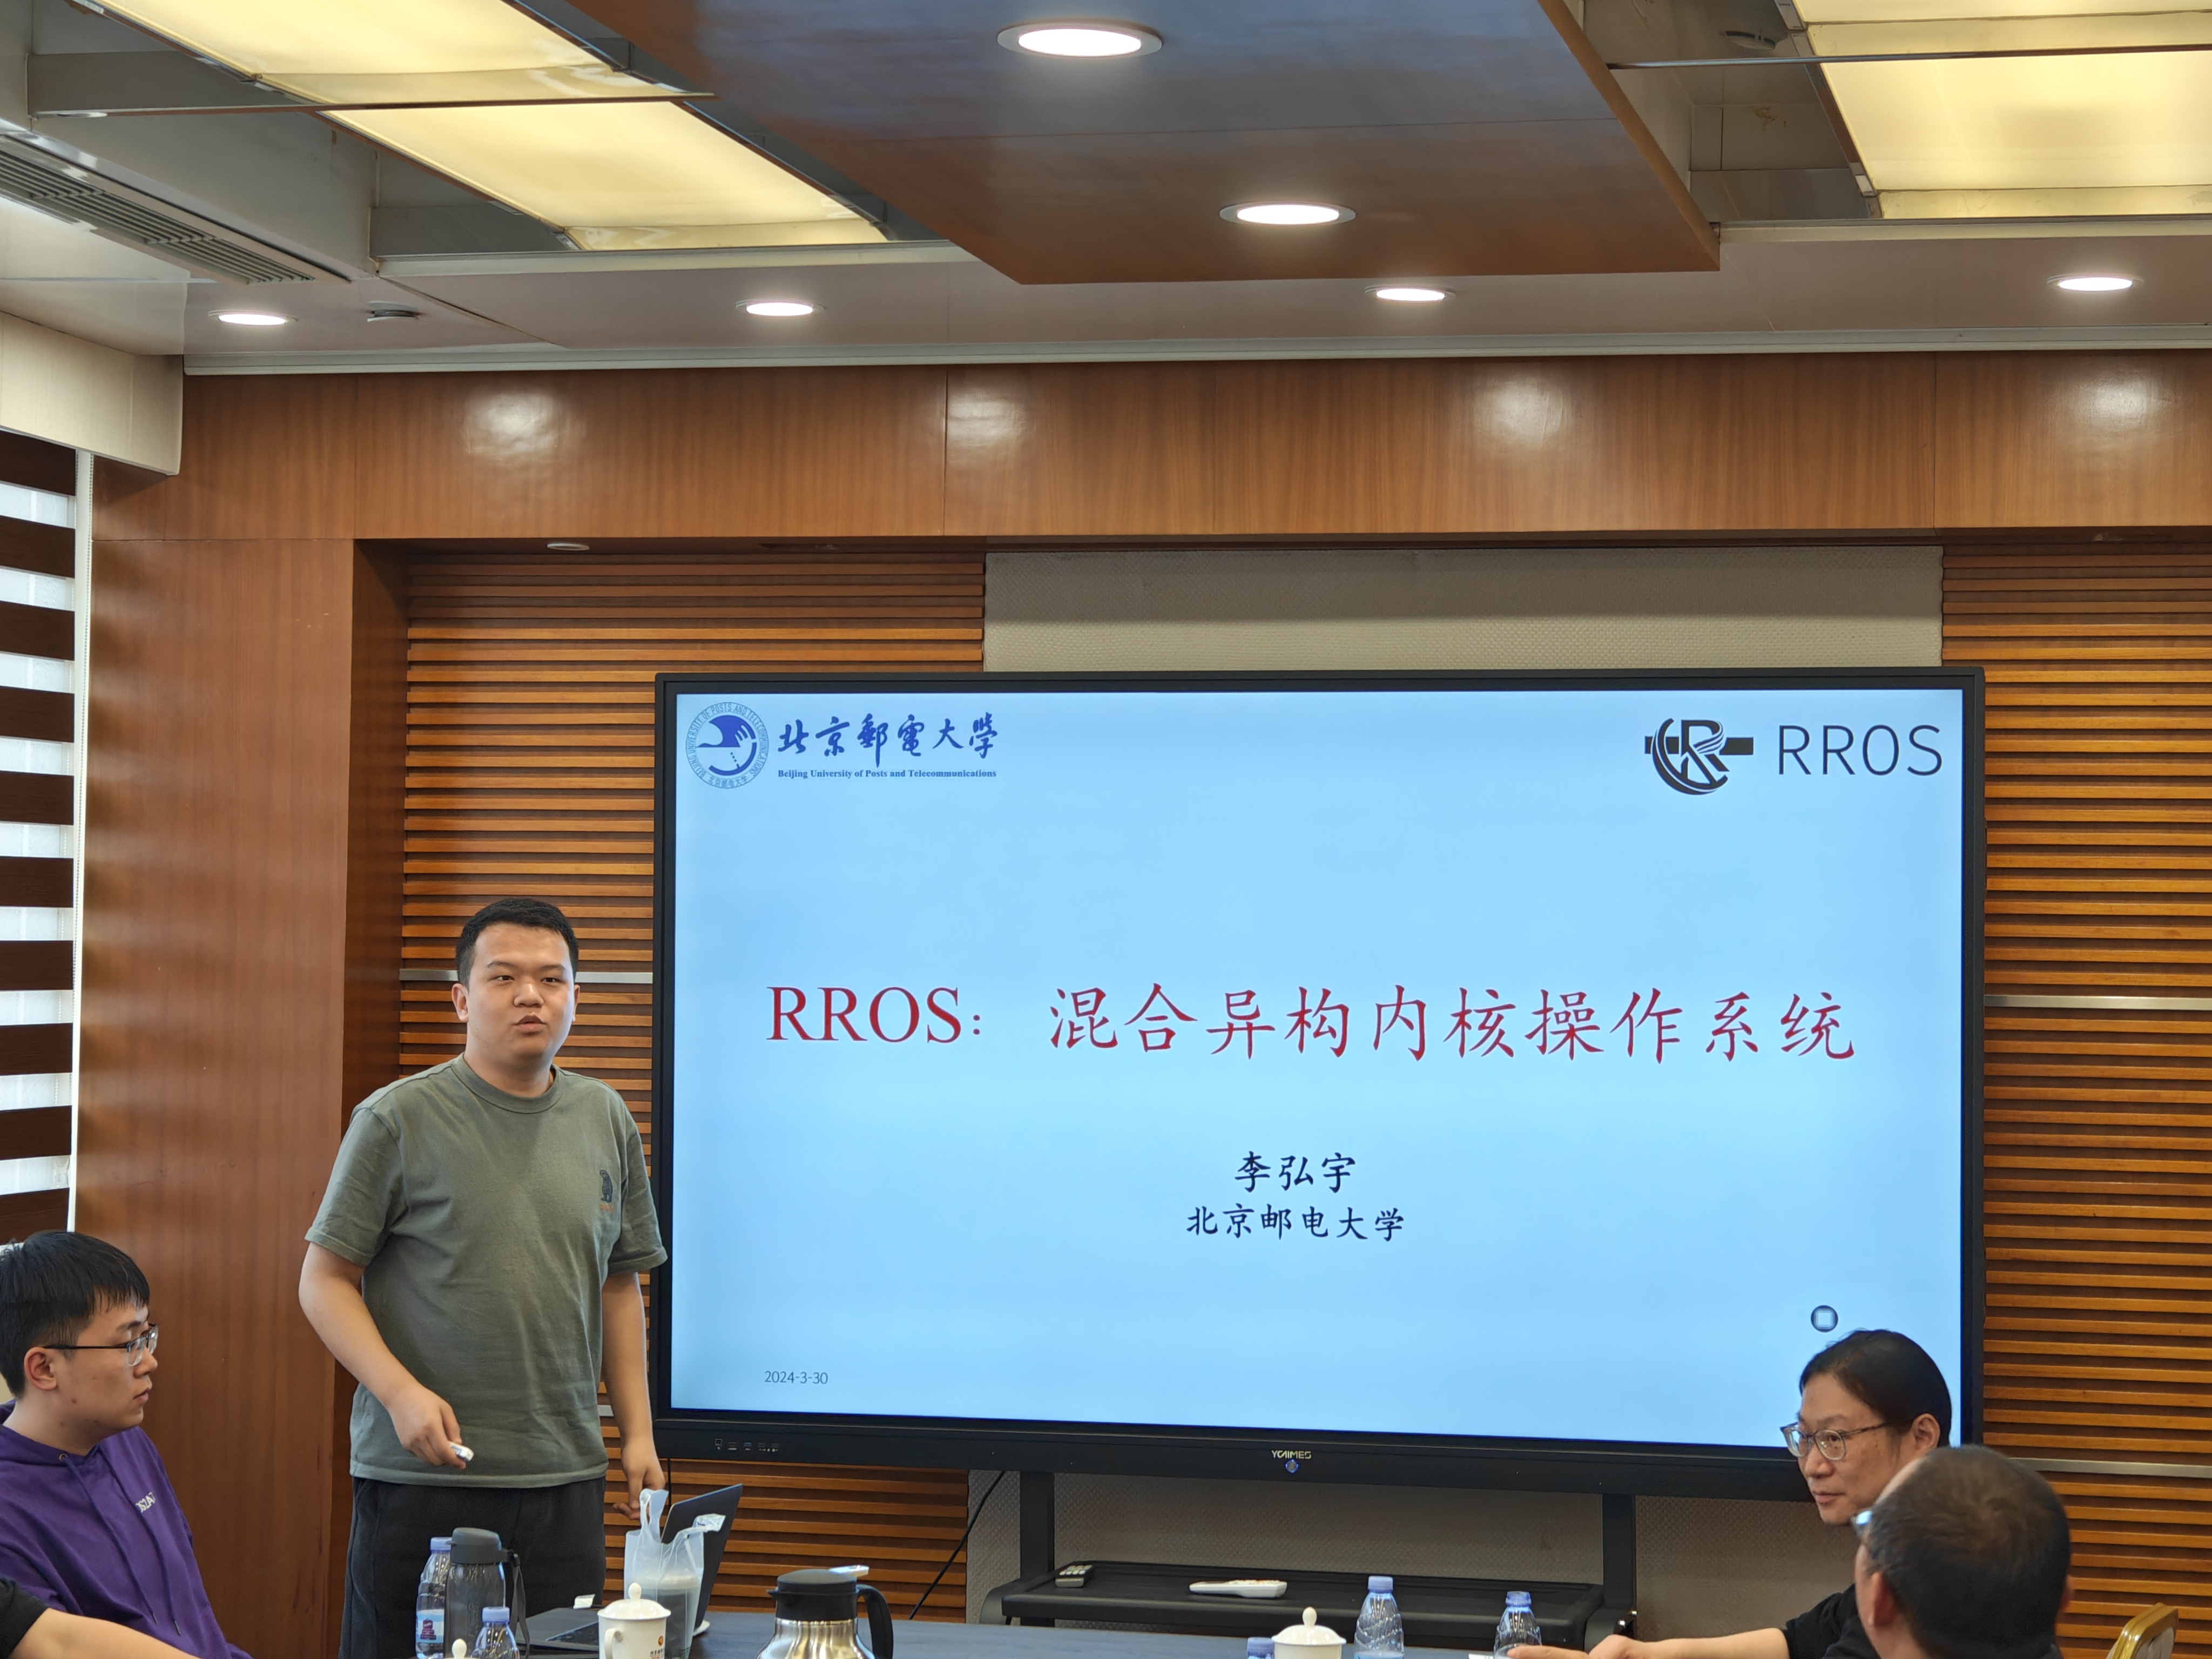 Hongyu Li introduces RROS